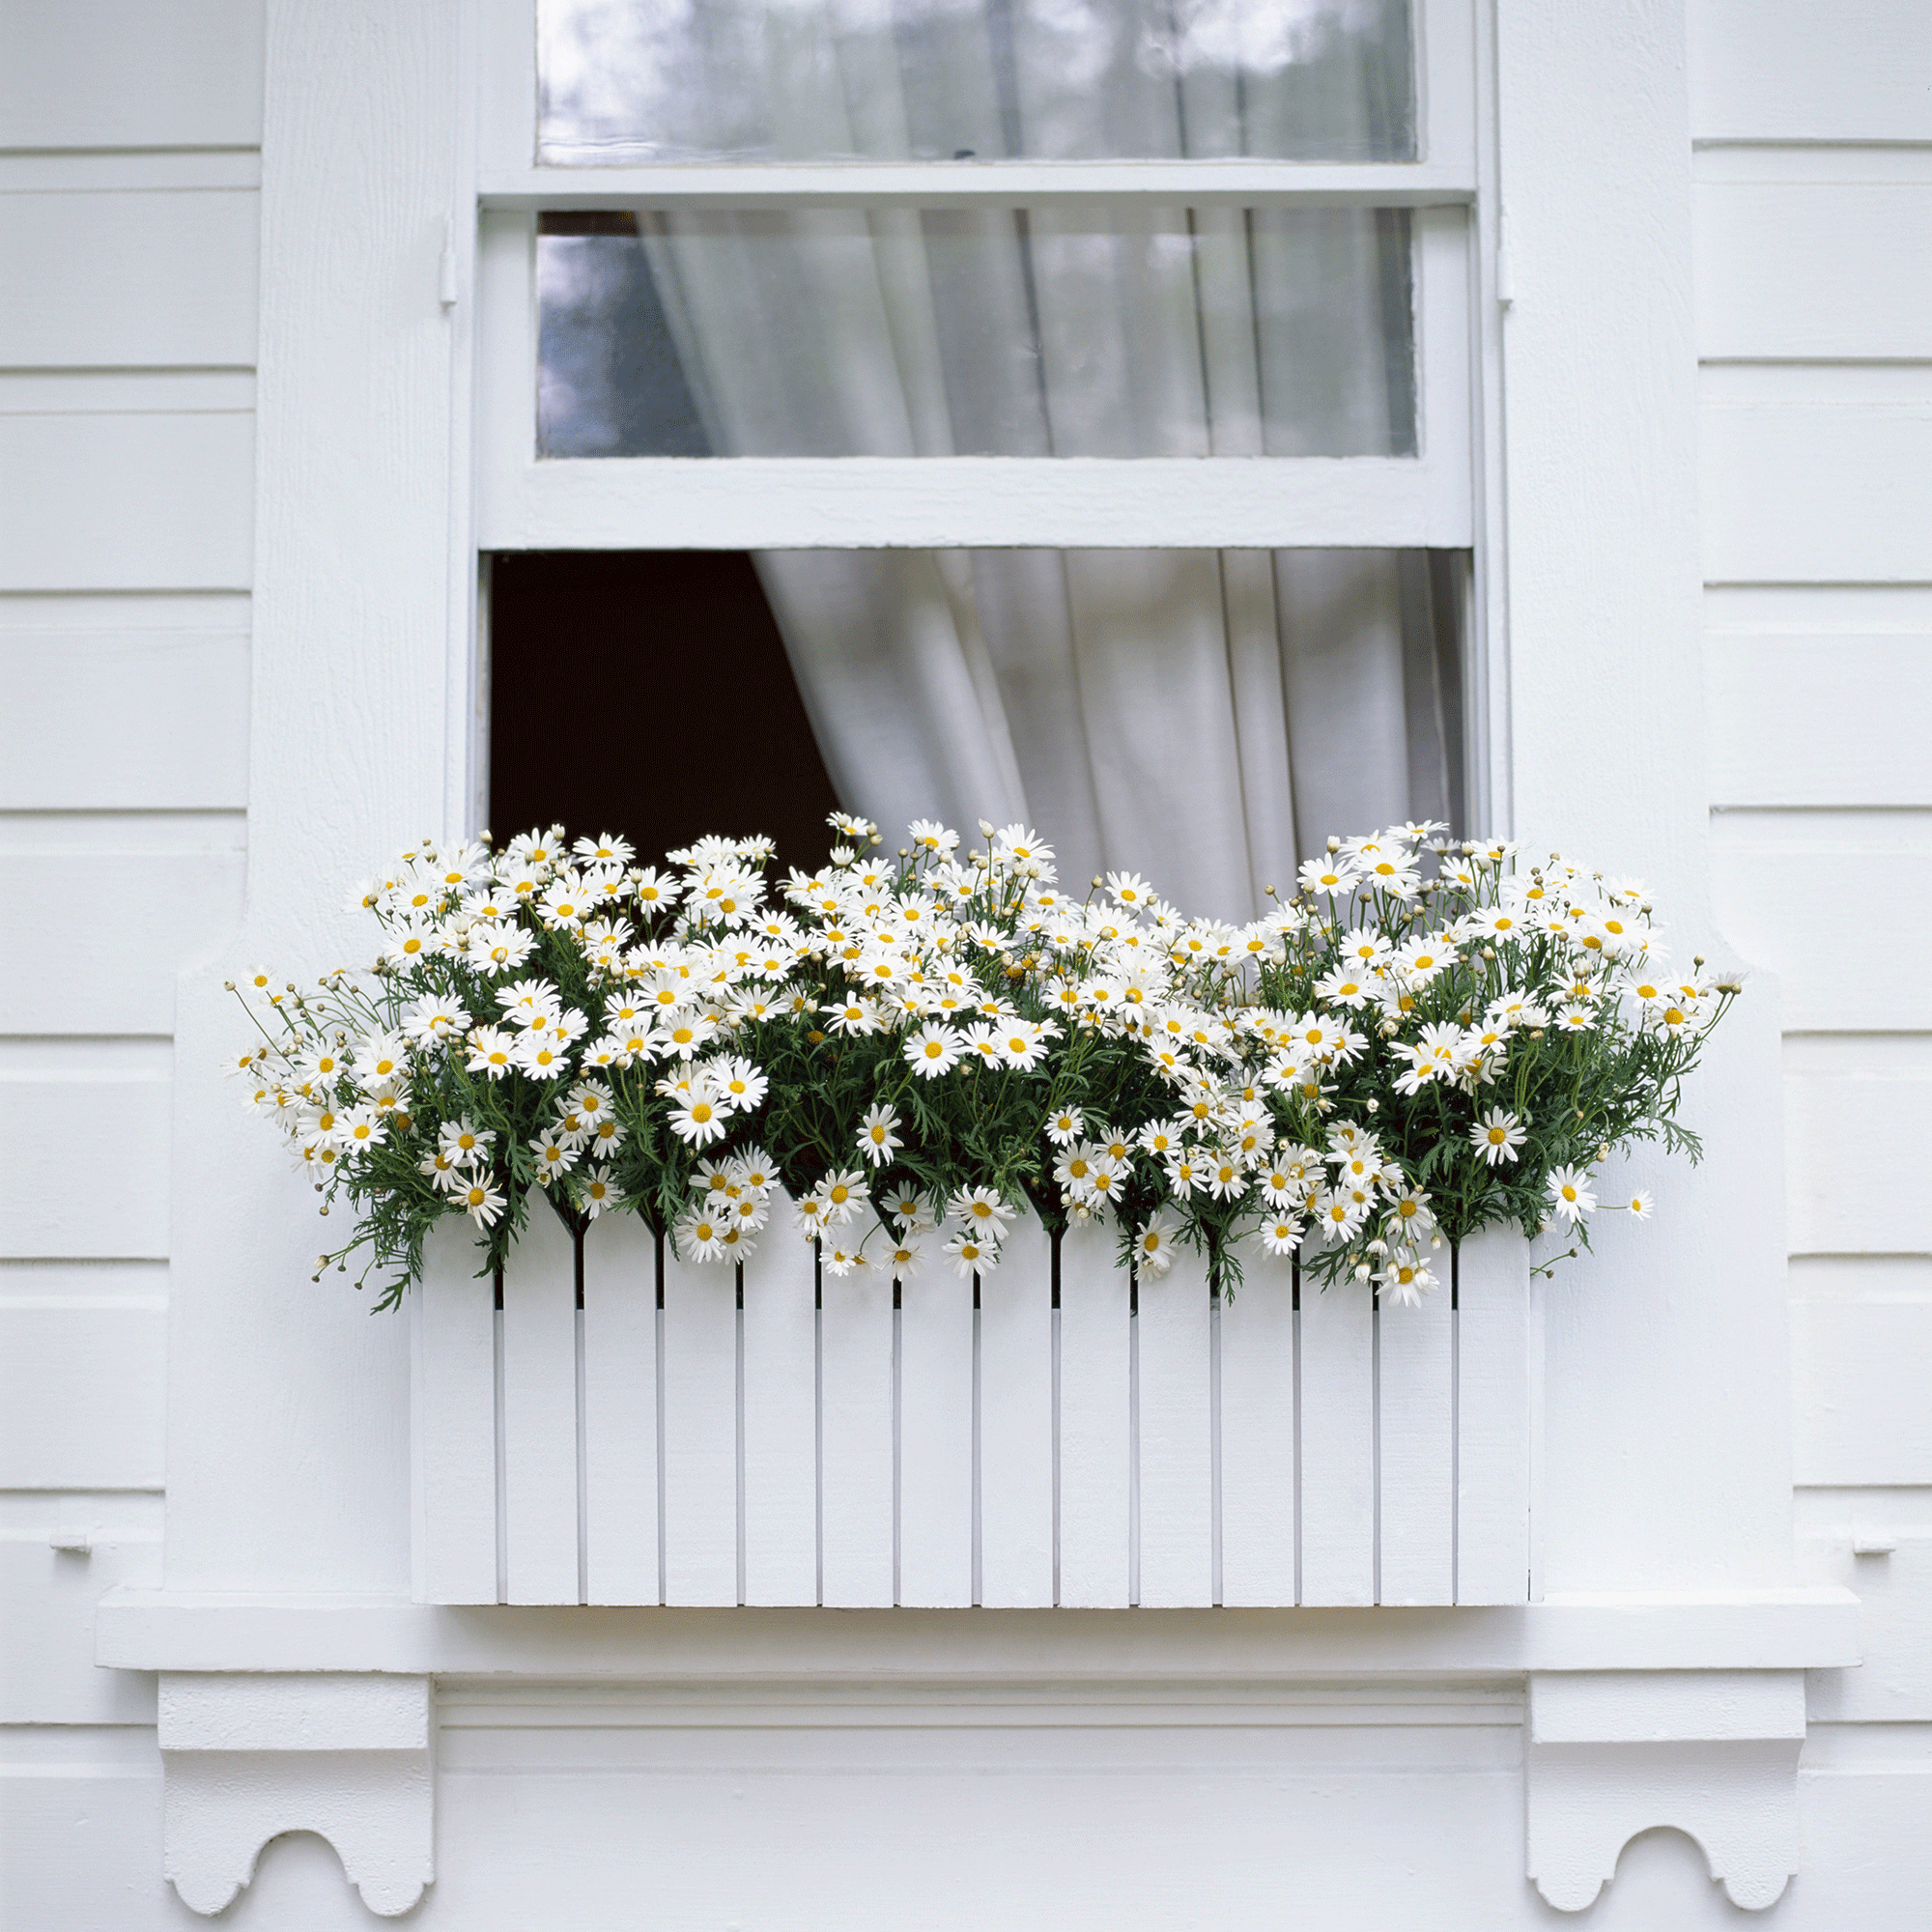 Window box with daisies